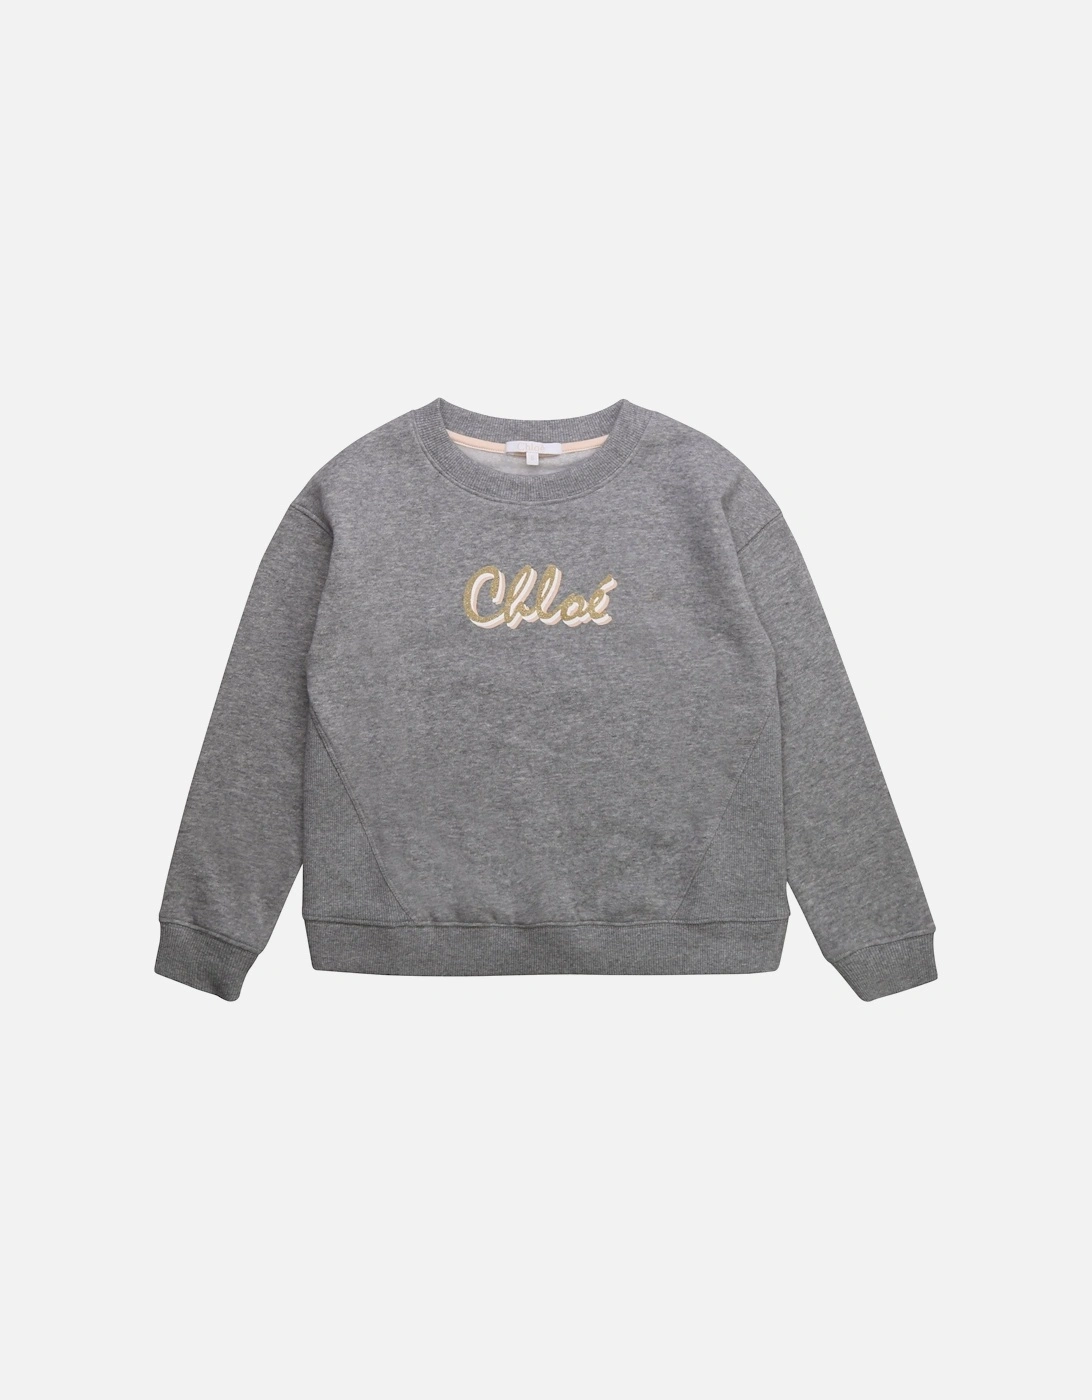 Chloe Girls Cotton Sweater Grey, 2 of 1